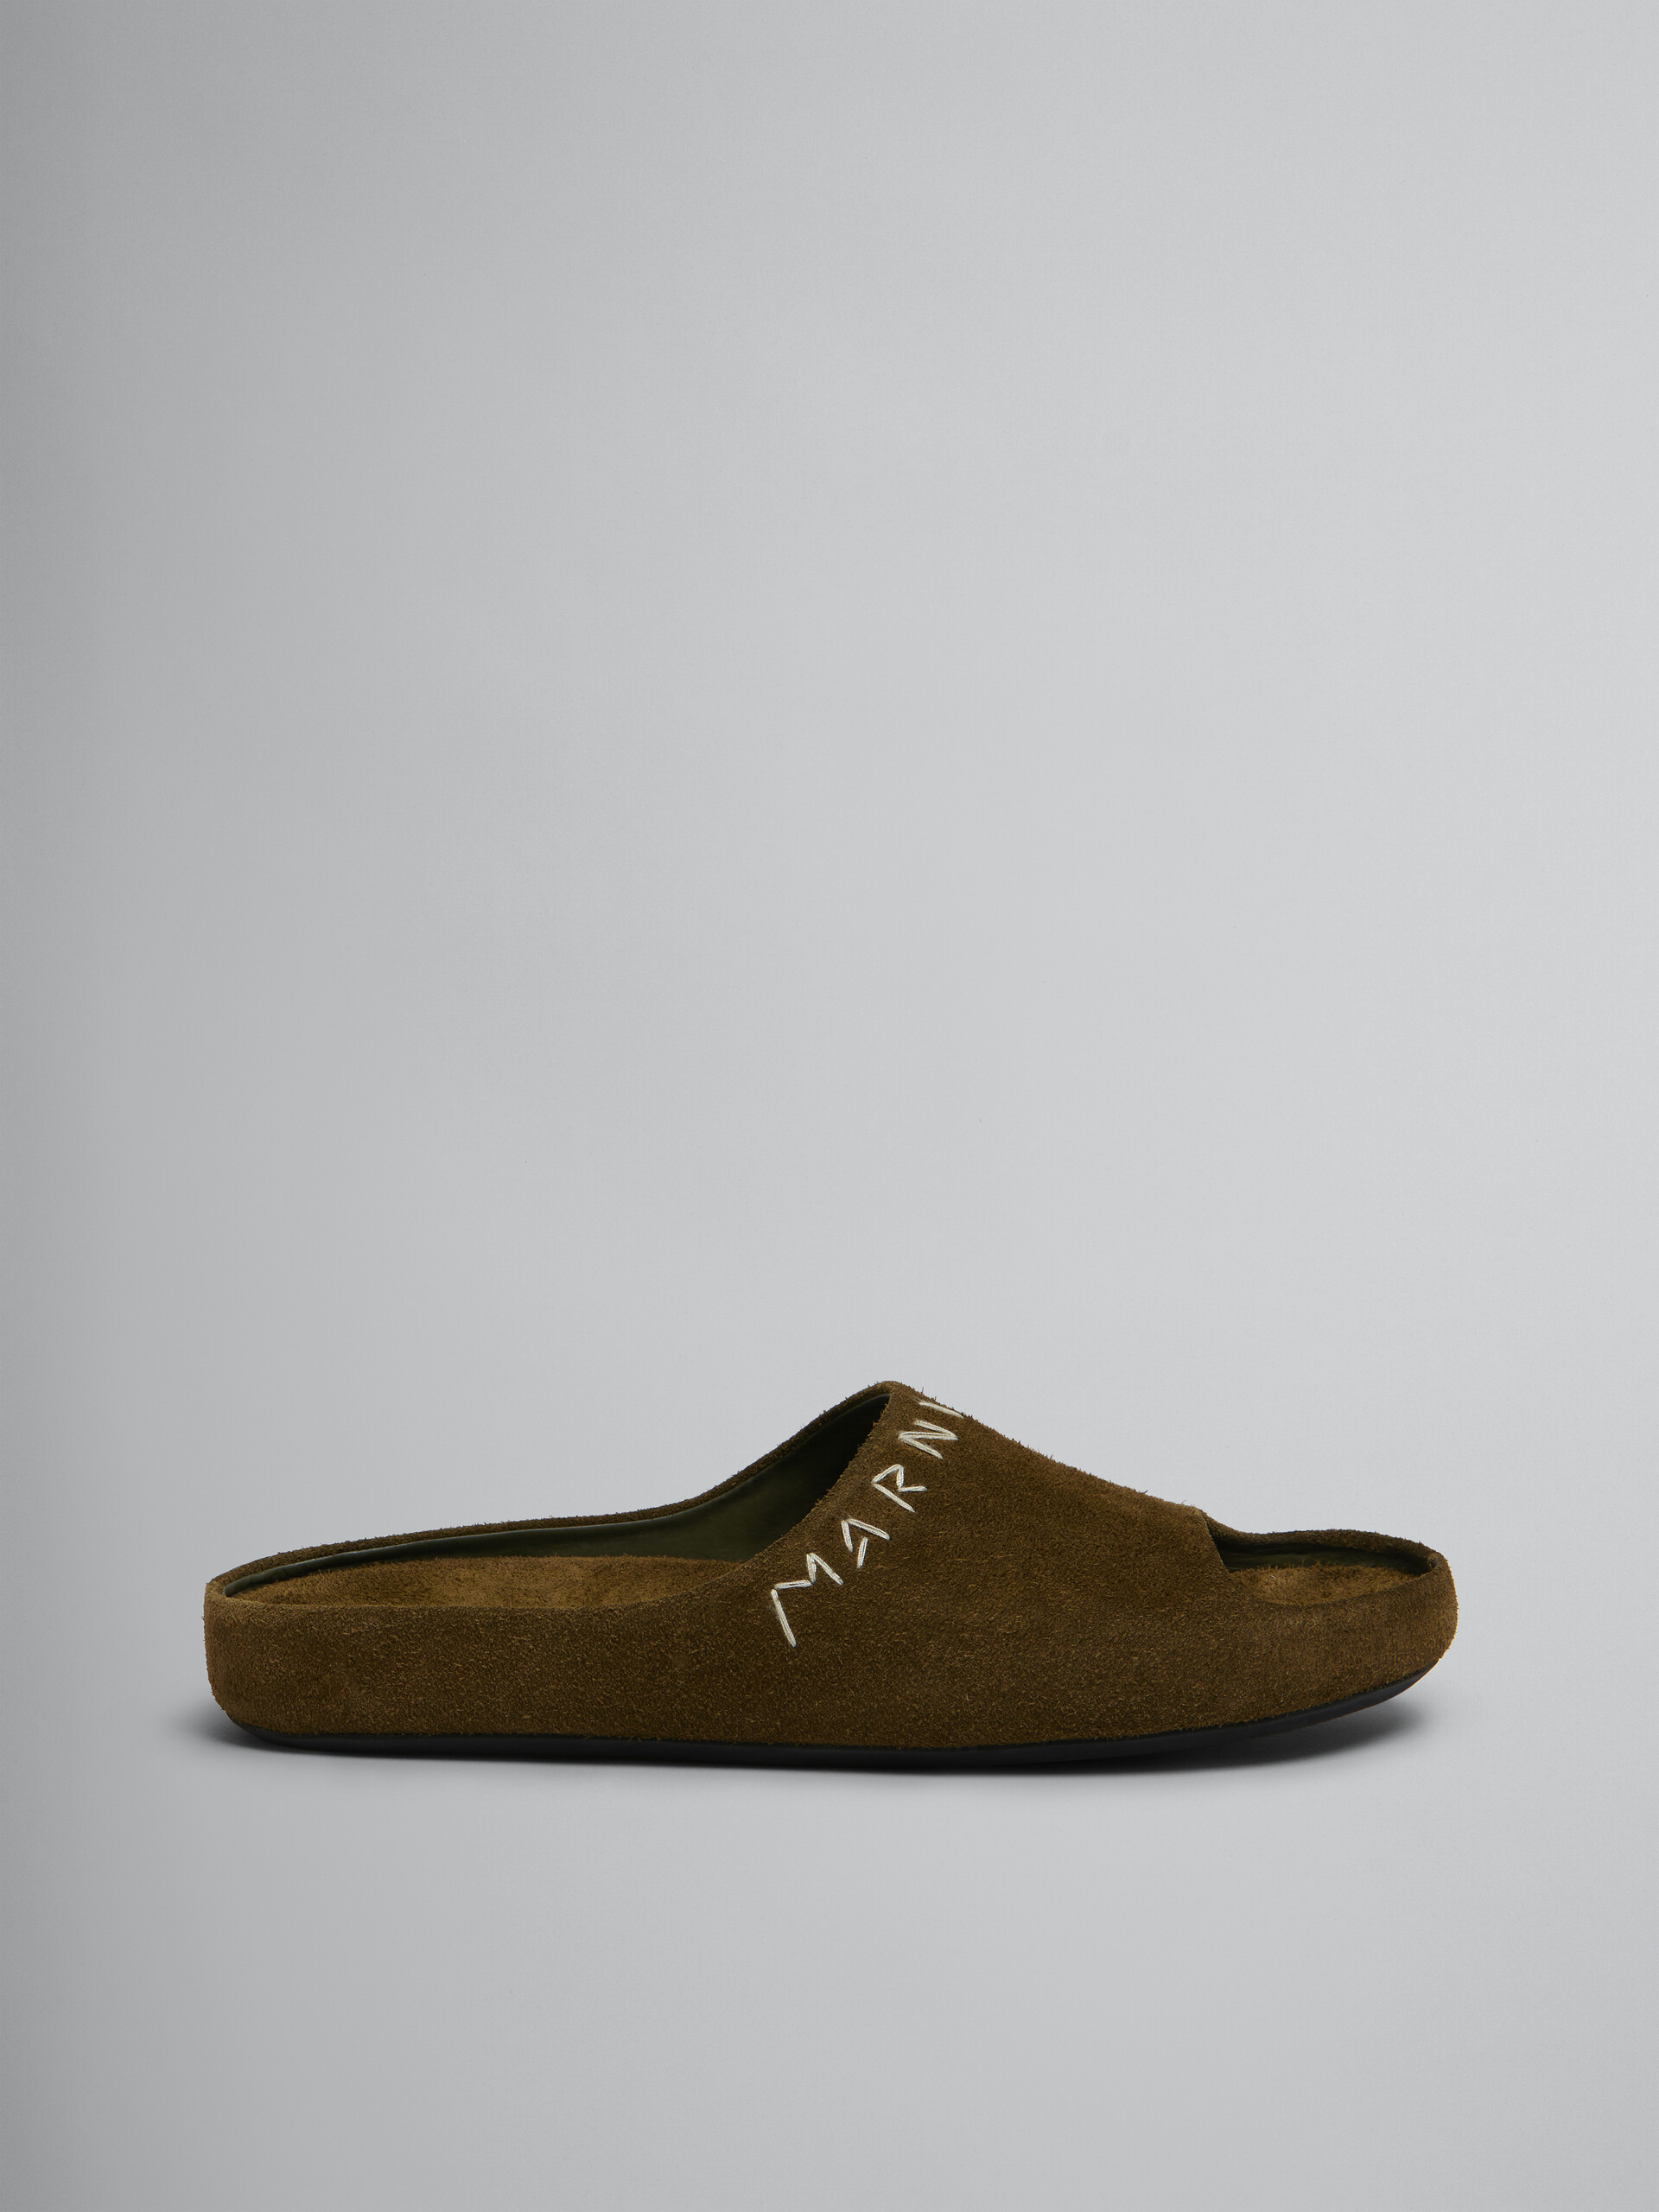 Lilac suede Fusslide sandal - Sandals - Image 1